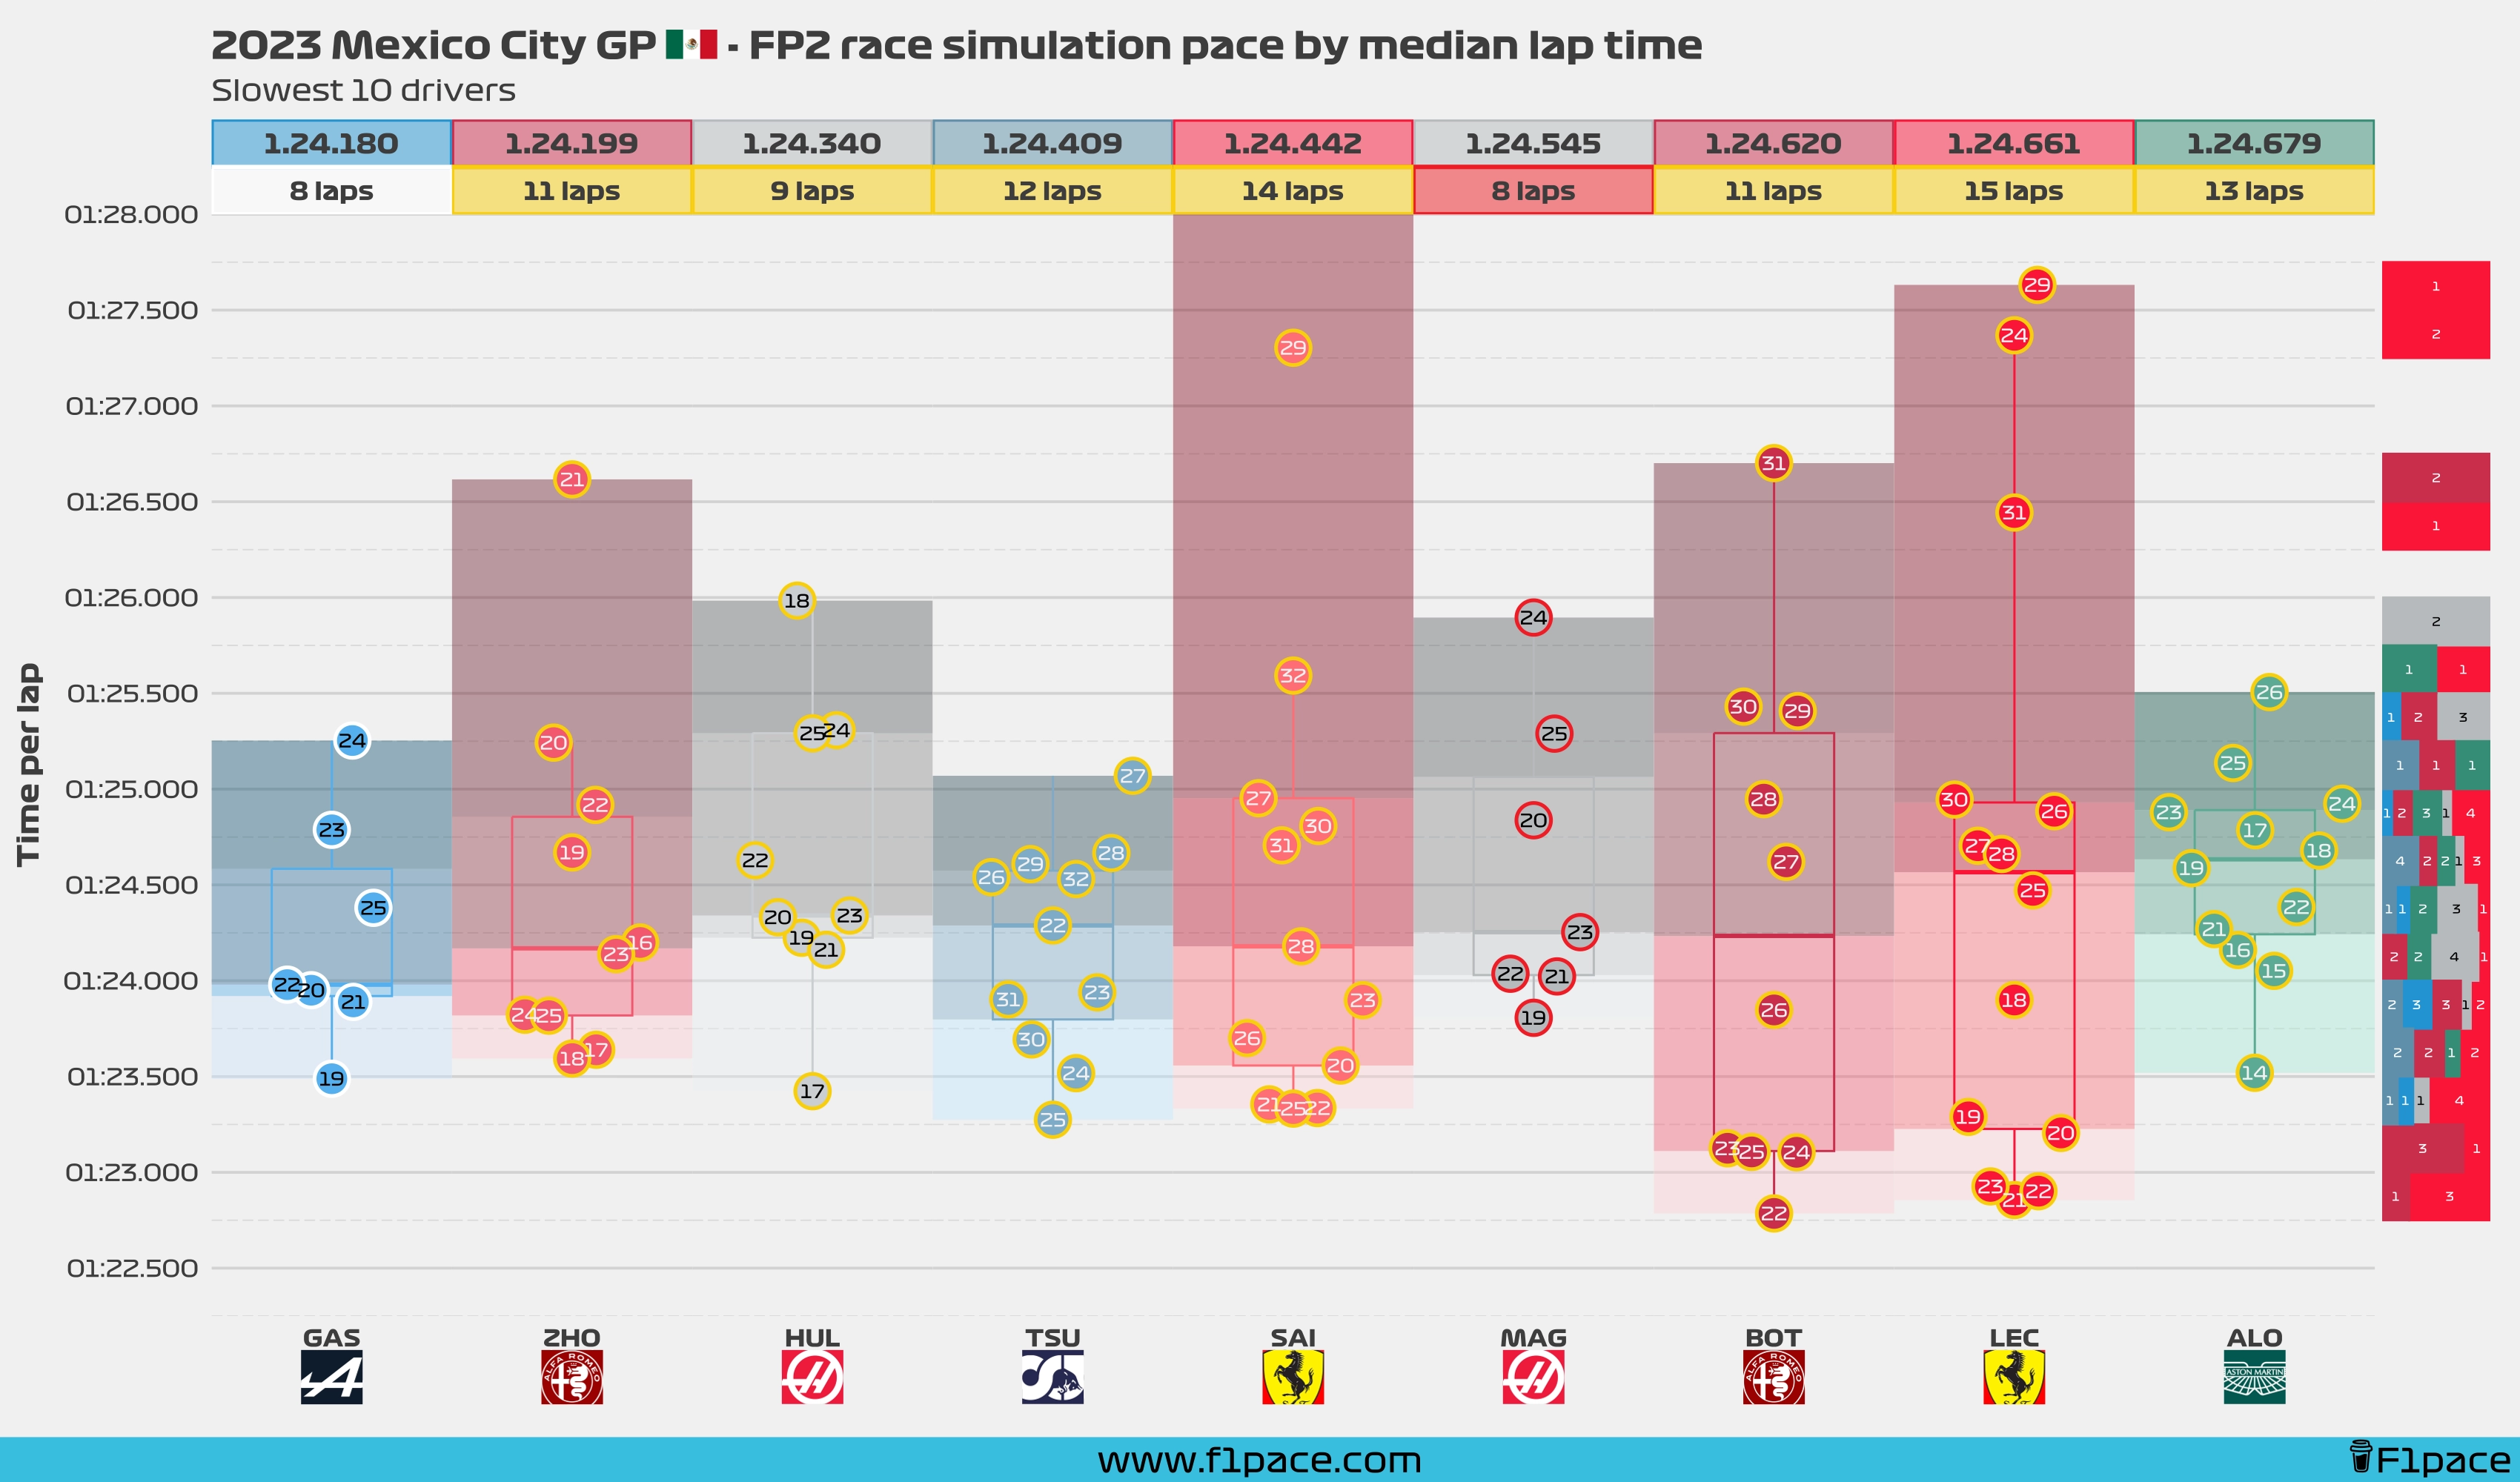 Race simulation pace: Bottom 10 drivers